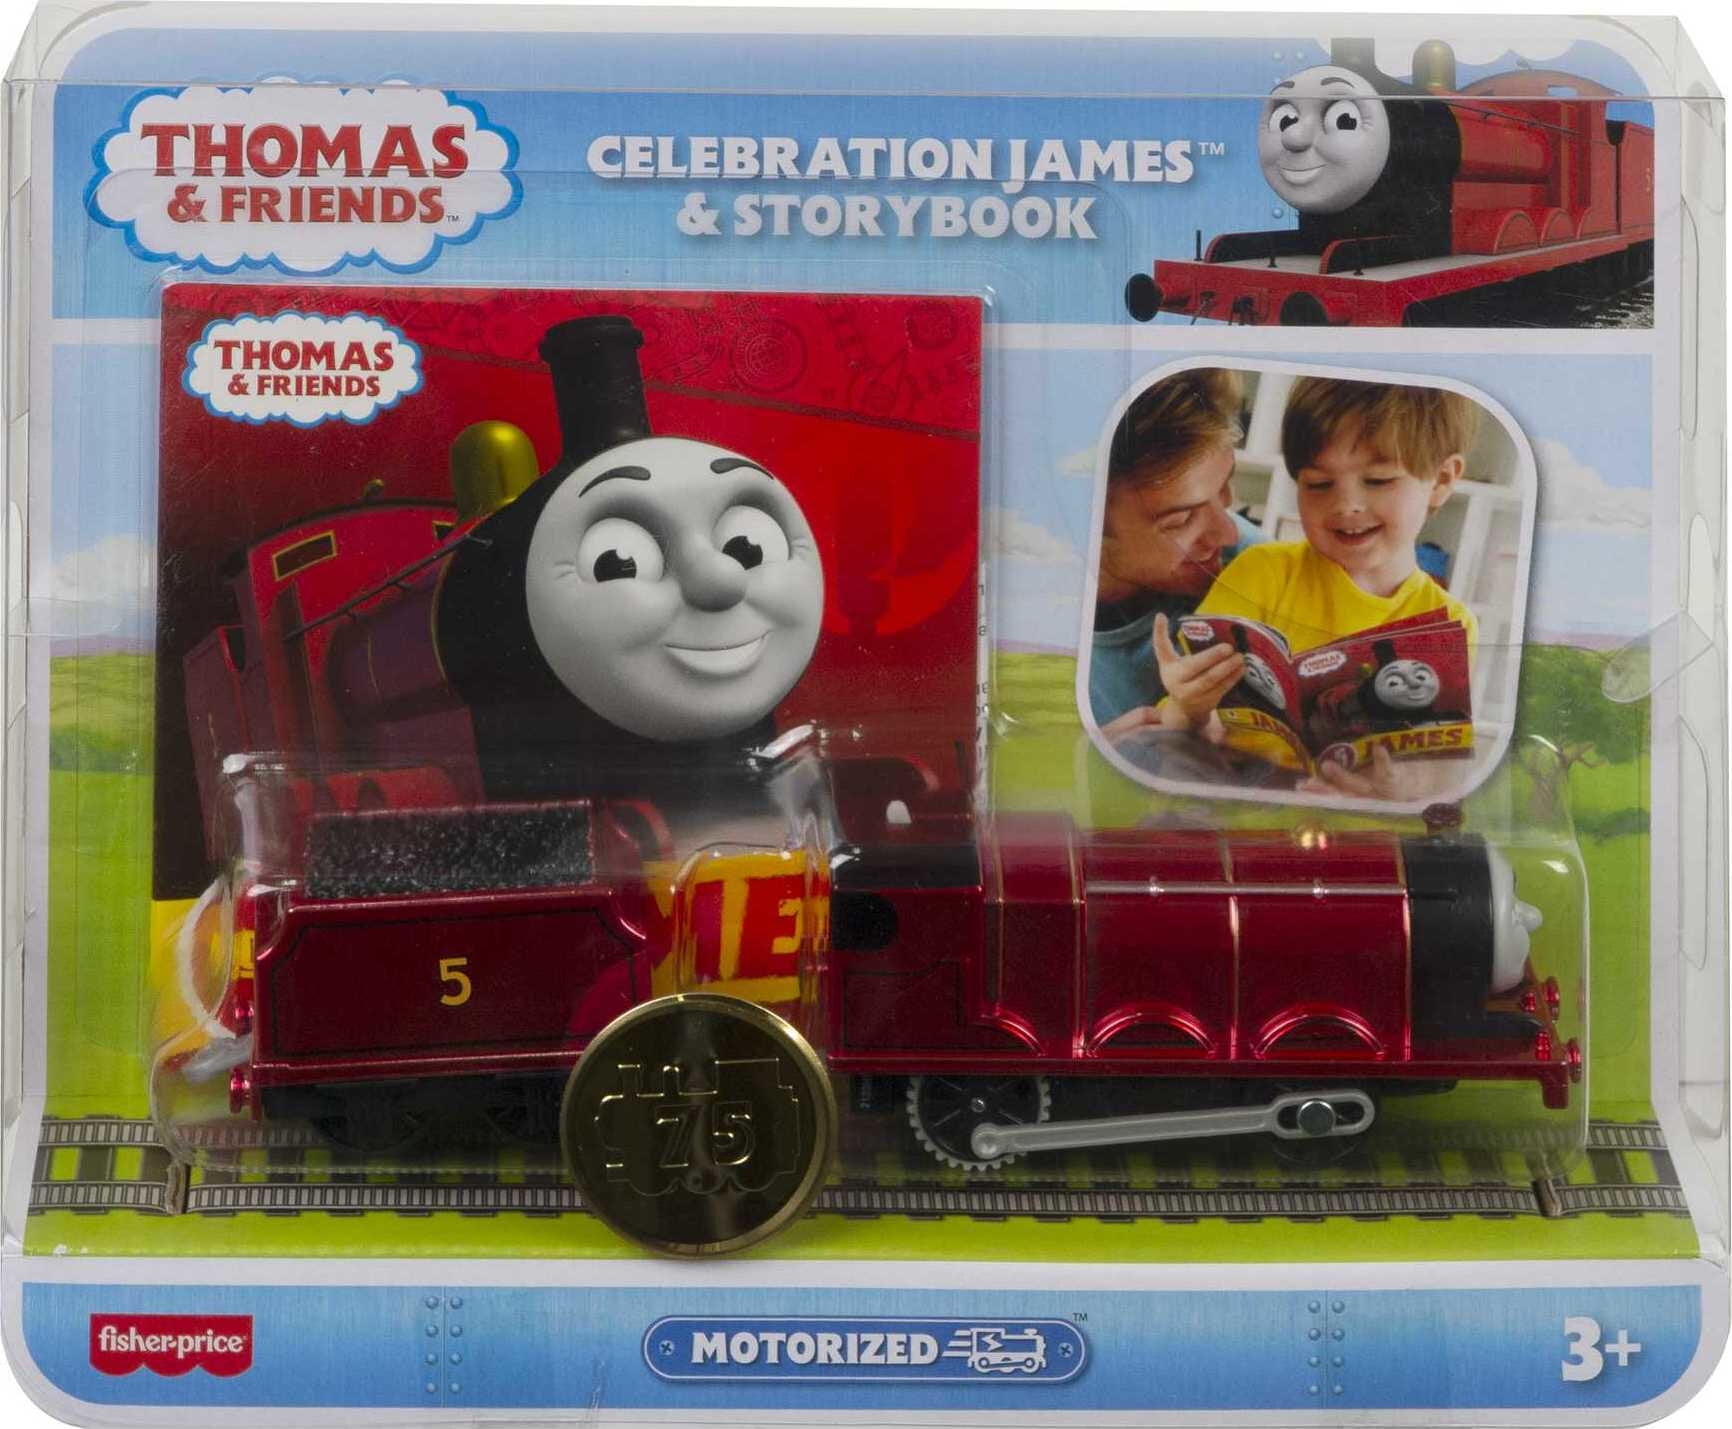 Thomas & Friends Celebration James Metallic Engine & Storybook